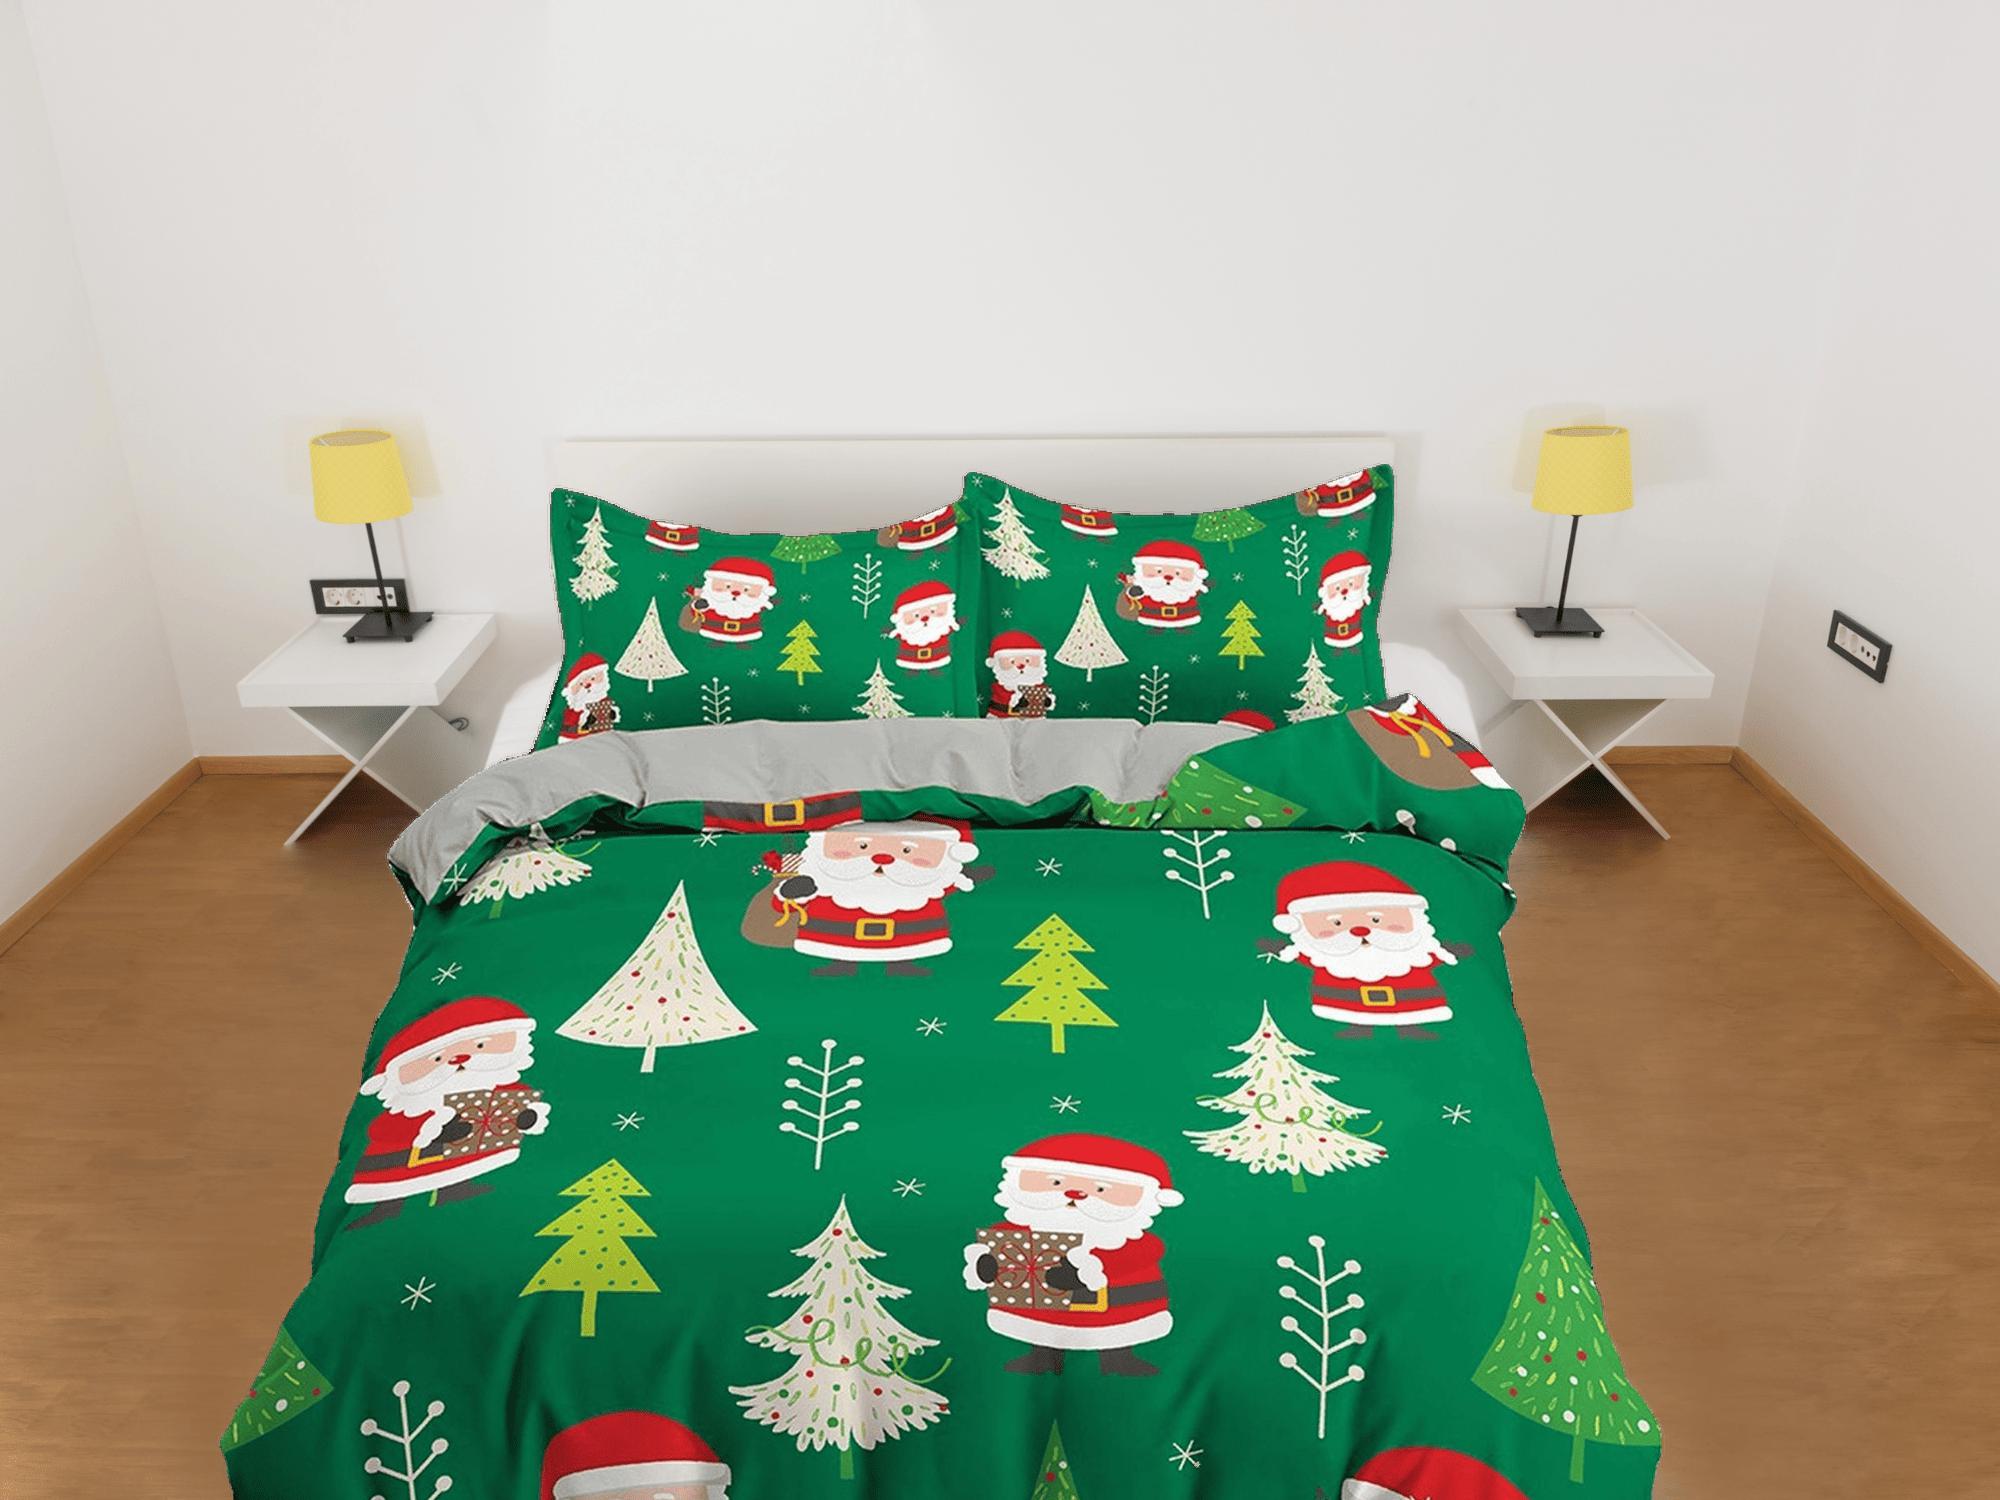 daintyduvet Santa claus green duvet cover set christmas full size bedding & pillowcase, college bedding, crib toddler bedding, holiday gift room decor